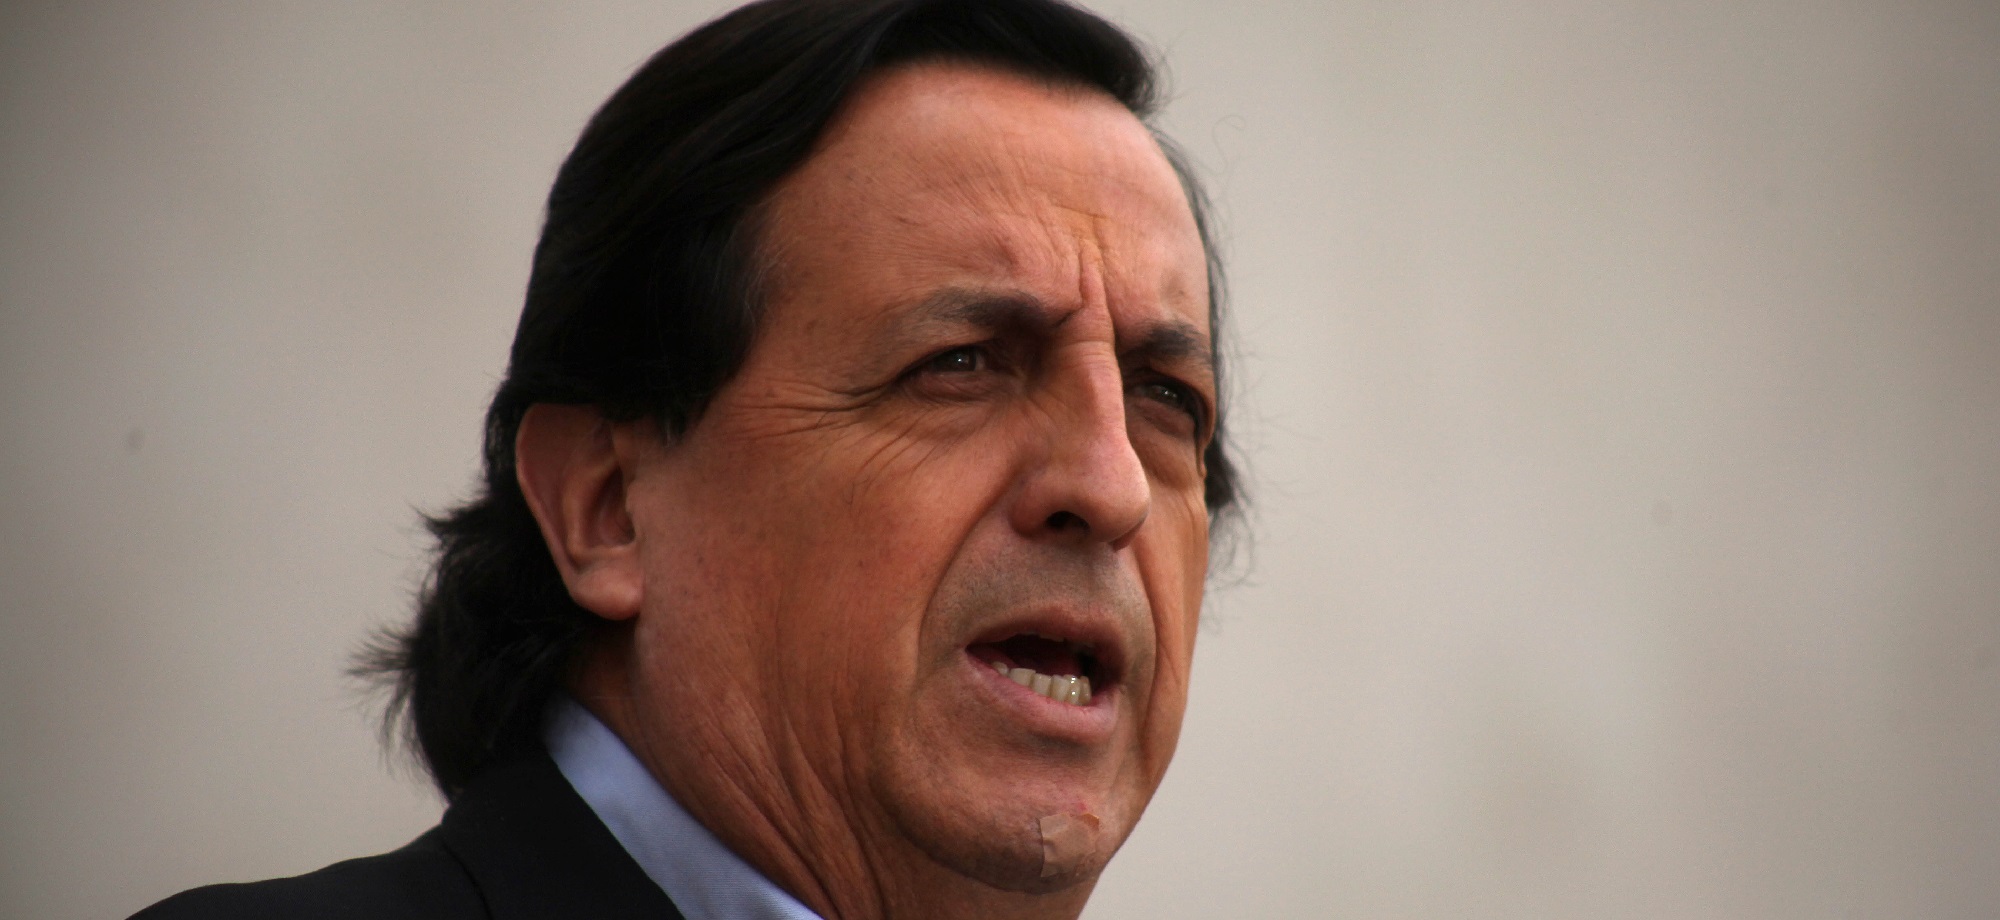 Víctor Pérez catalogó como "fundamental" respaldo a Carabineros y llamó a políticos a "no prejuzgar"